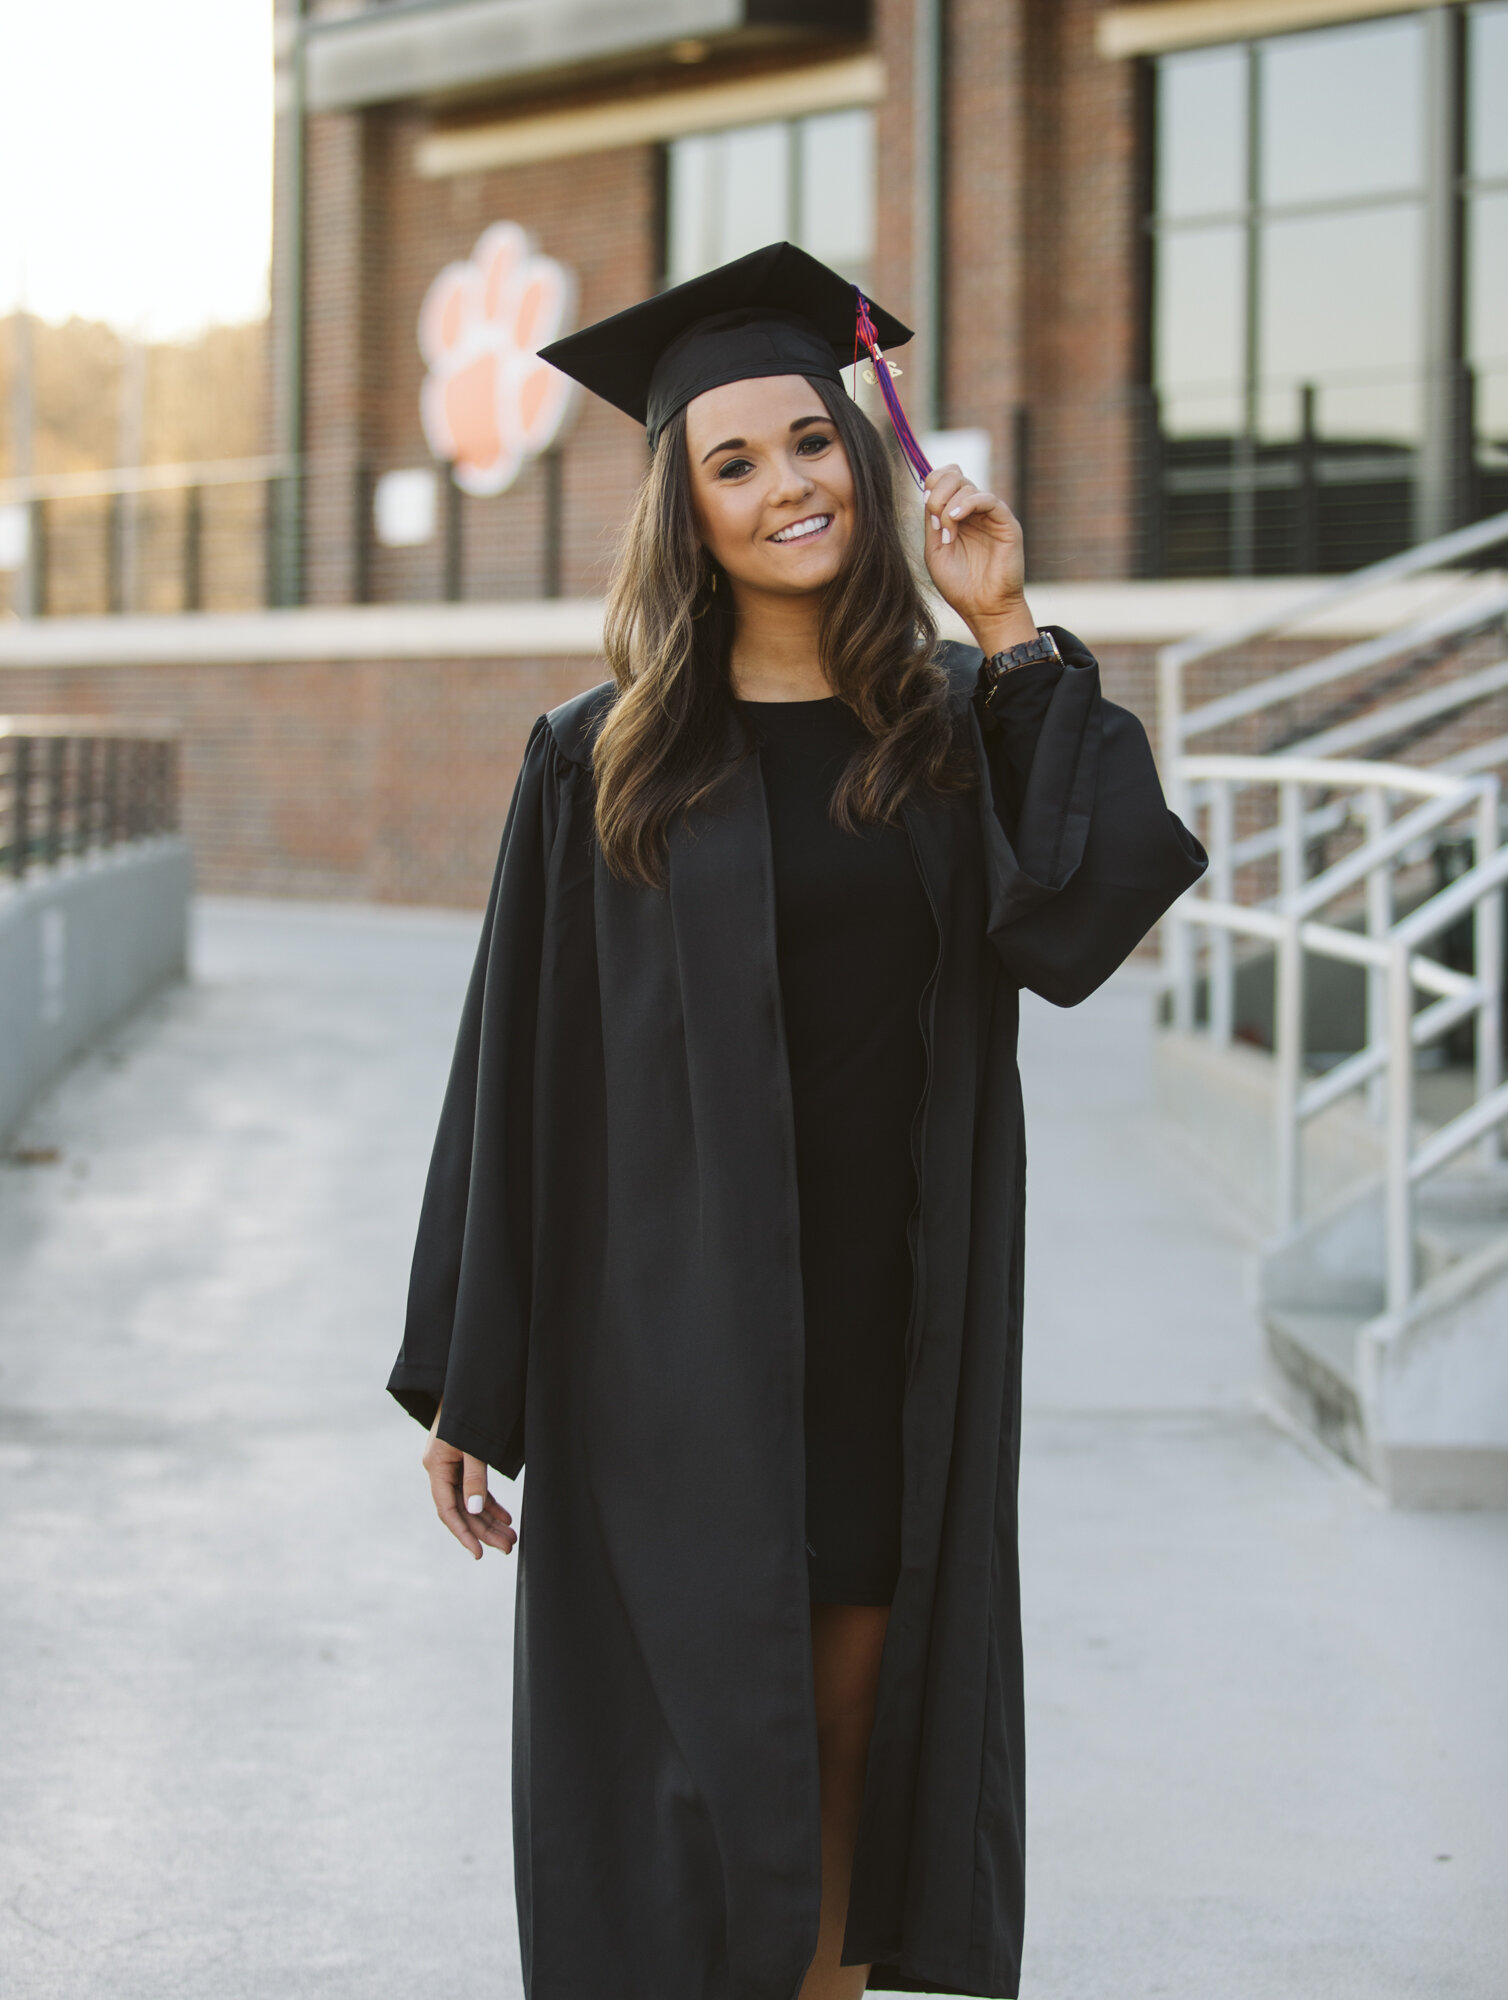 Katie_Clemson University Senior Graduation Photo-0614.jpg